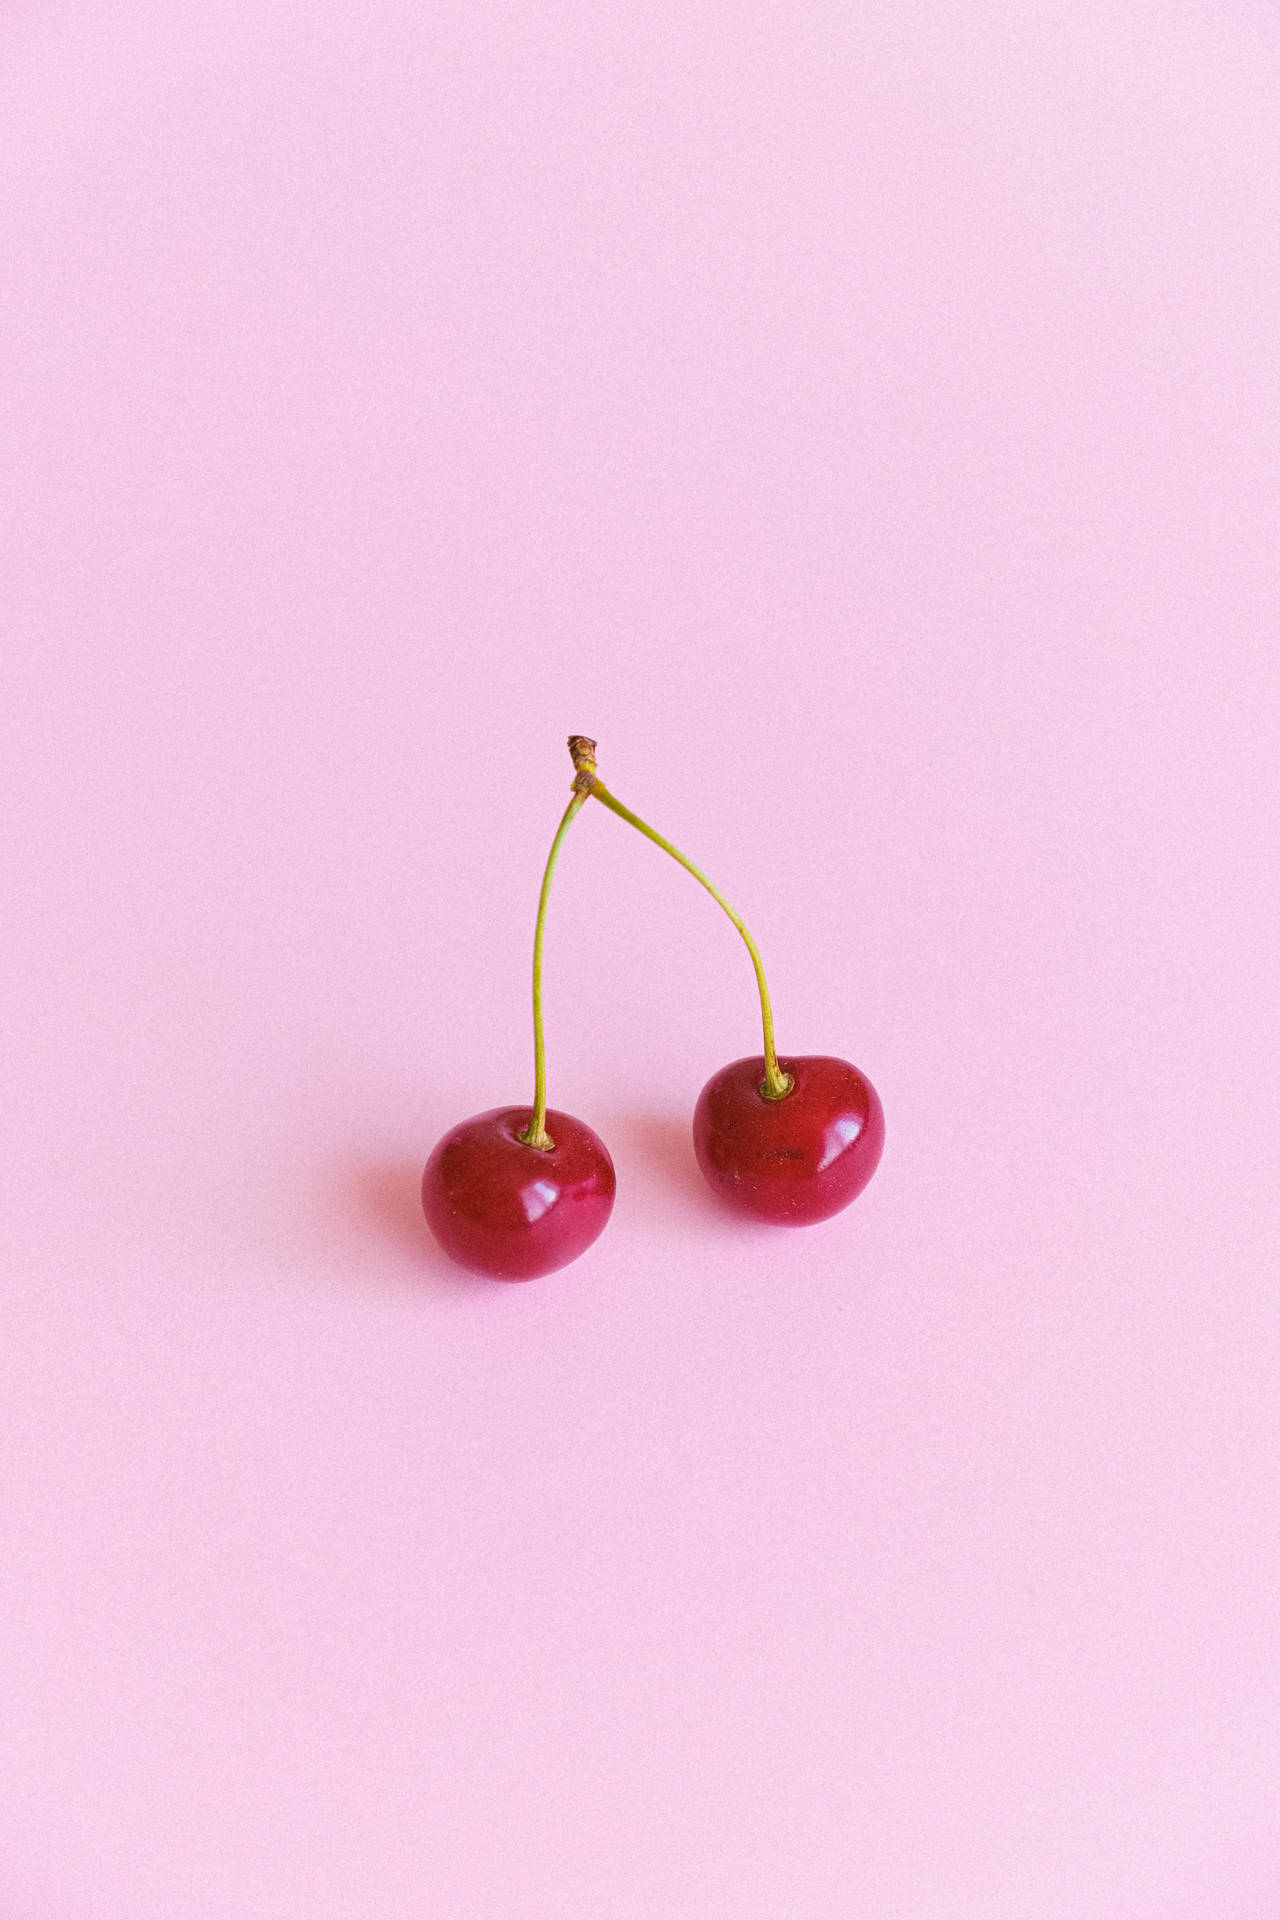 Cherries On Pink Background Background